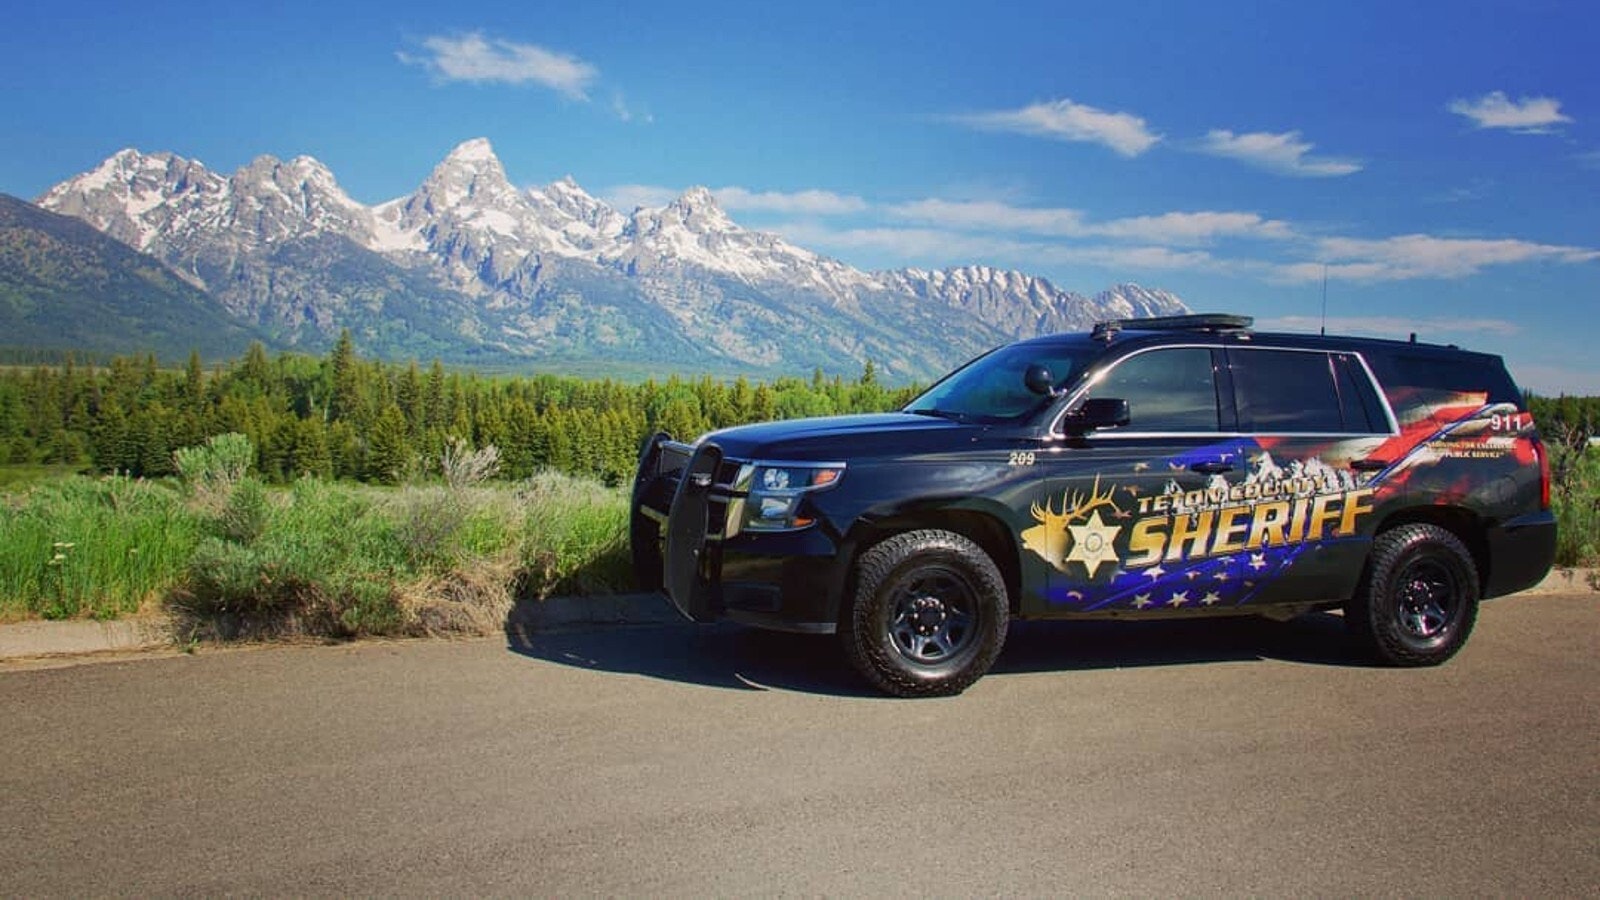 Teton county sheriff